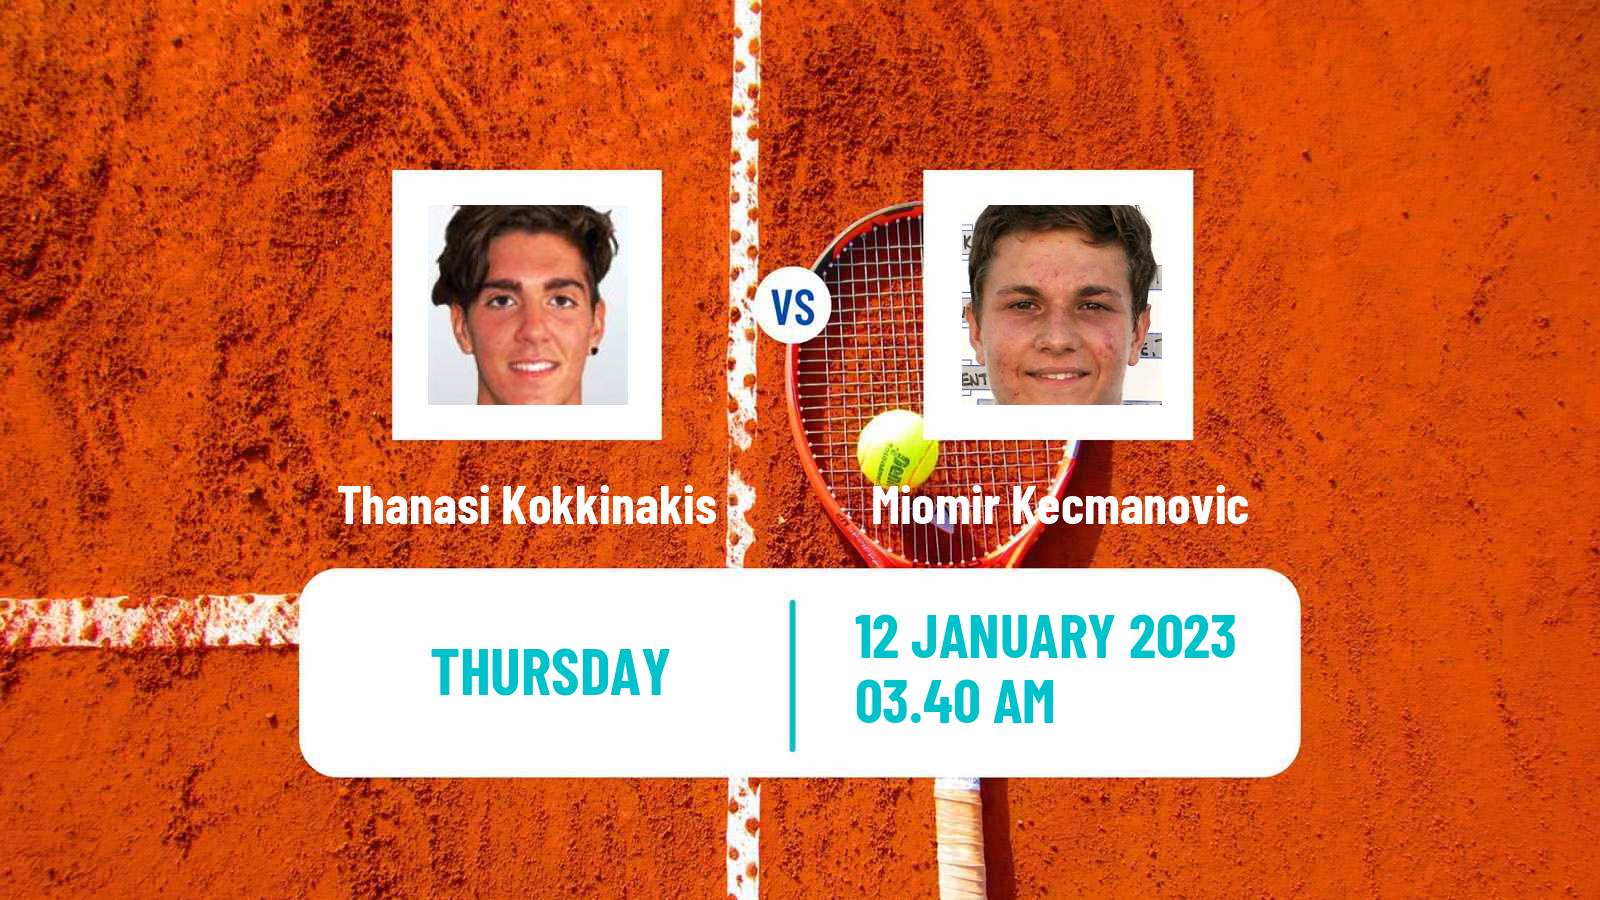 Tennis ATP Adelaide 2 Thanasi Kokkinakis - Miomir Kecmanovic